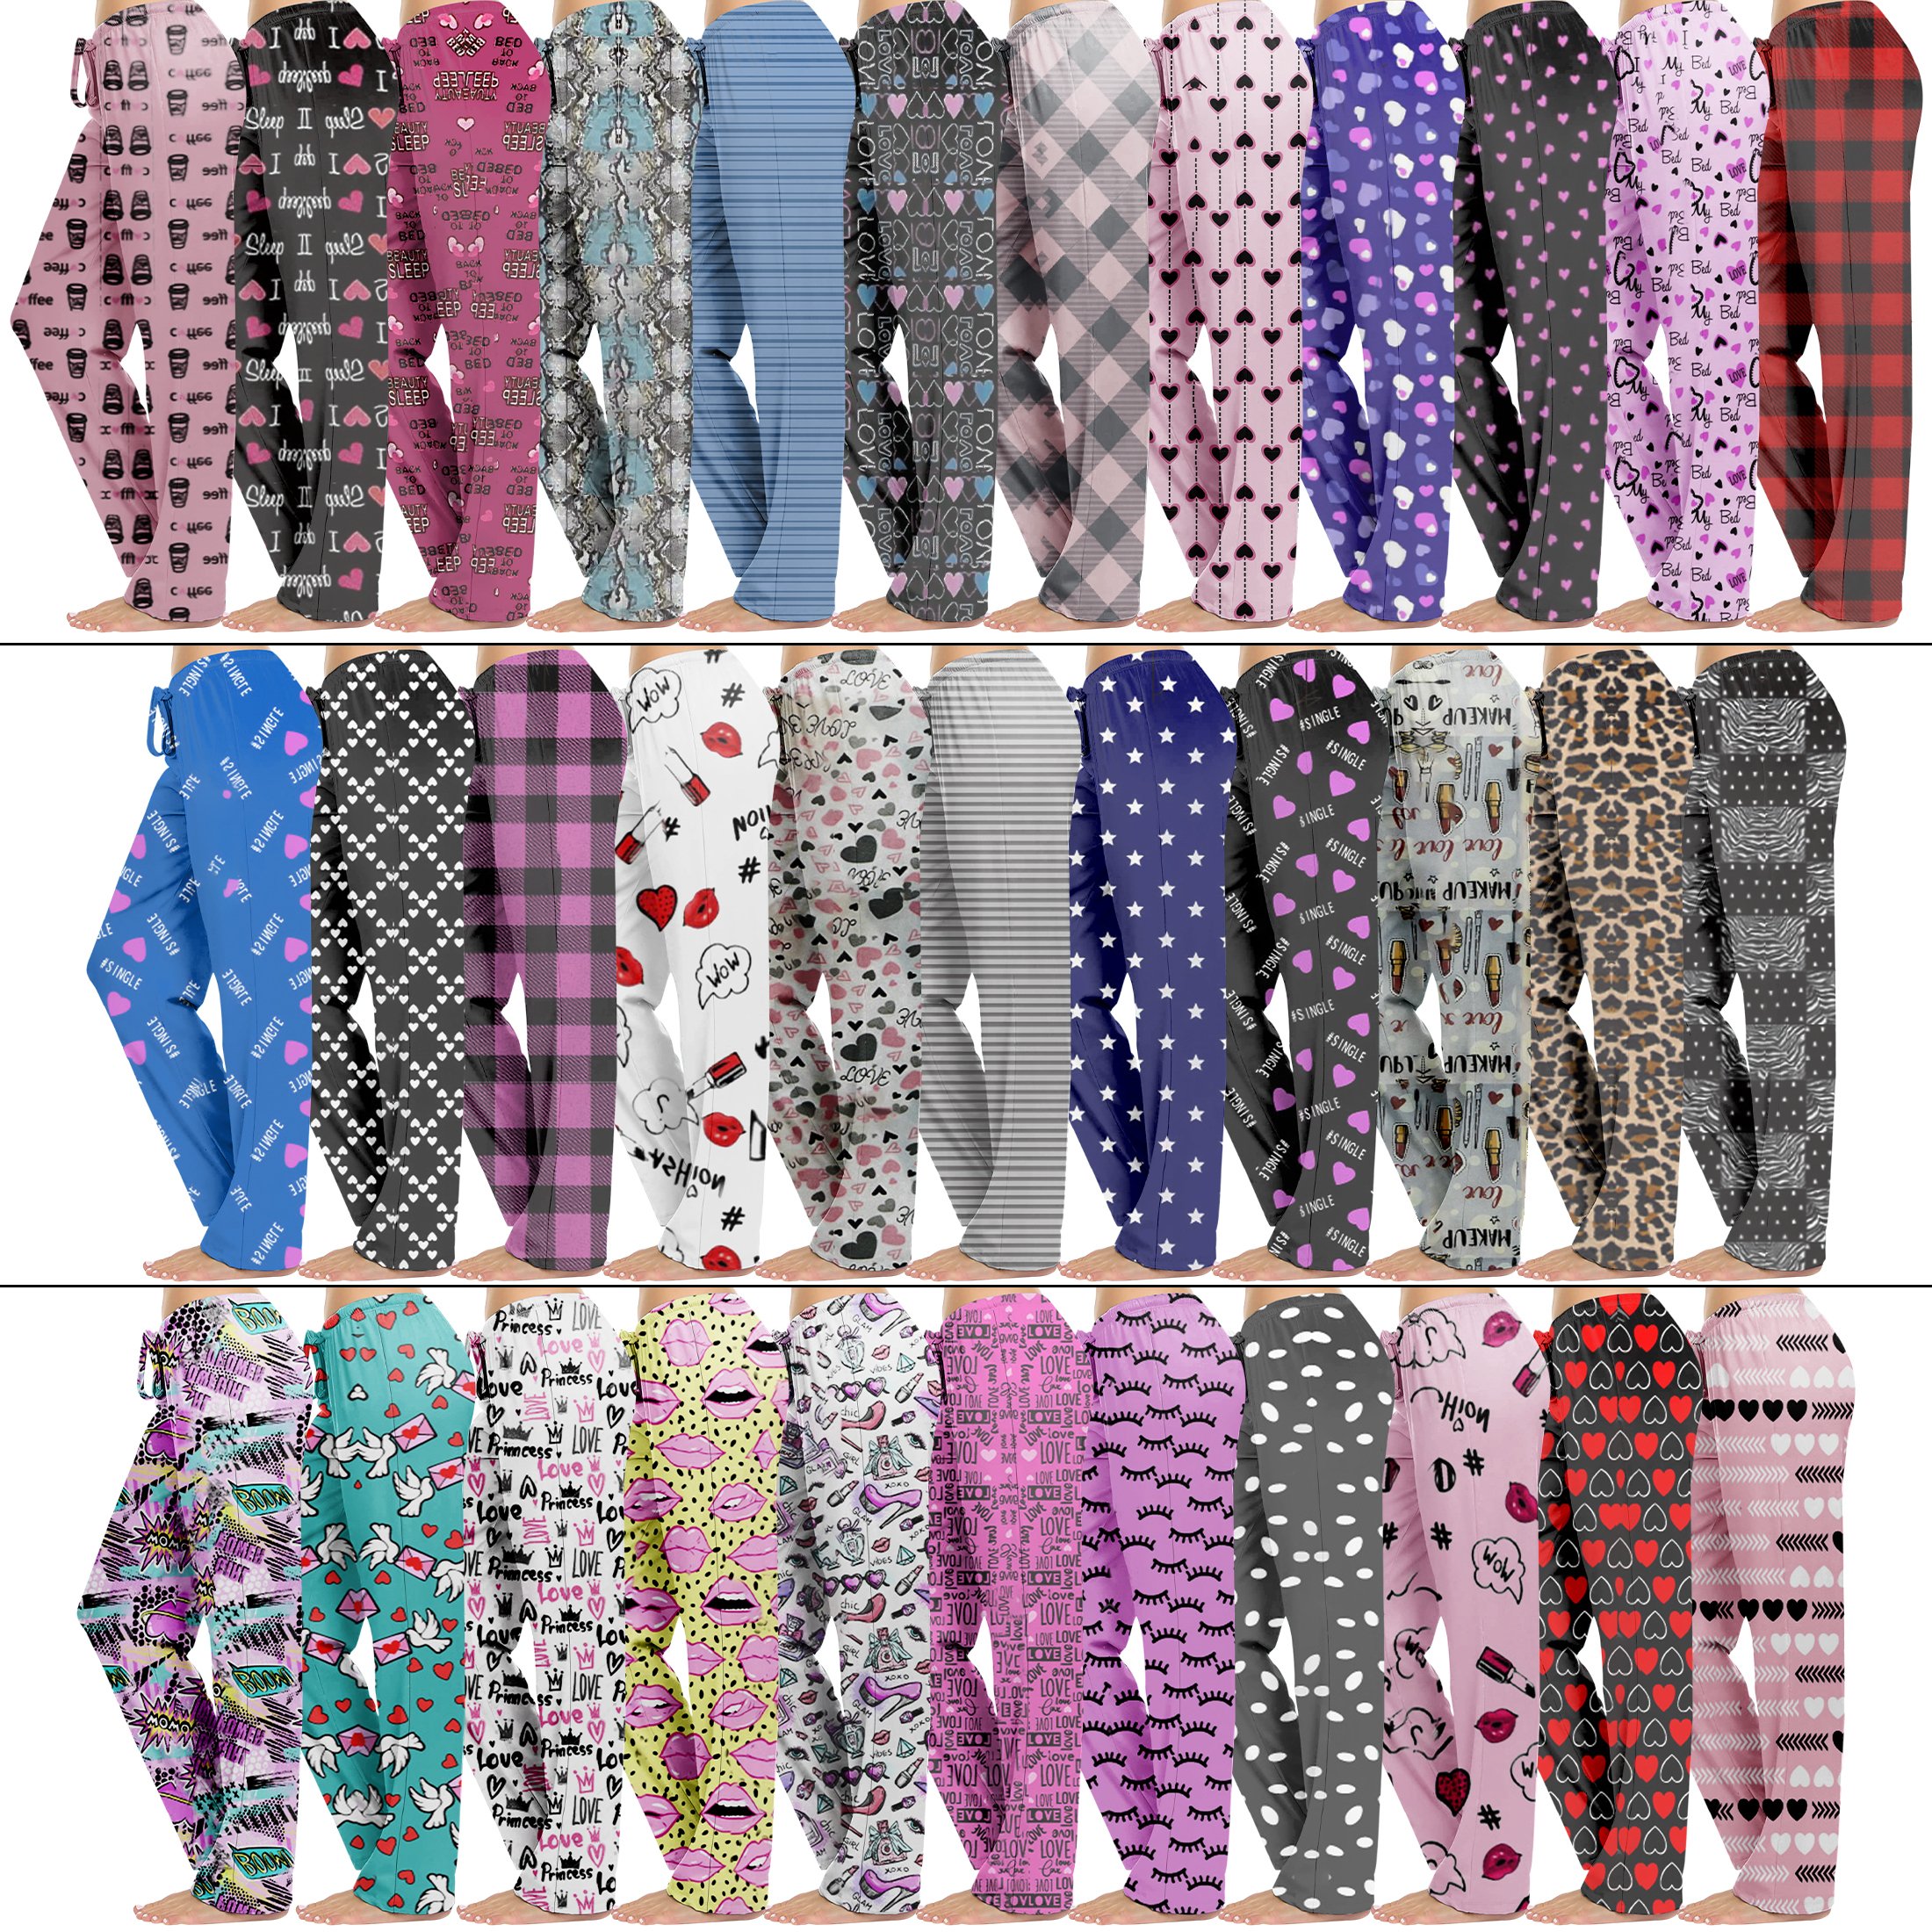 3-Pack: Women's Comfy Printed Lounge Pajama Pants For Sleepwear - Small